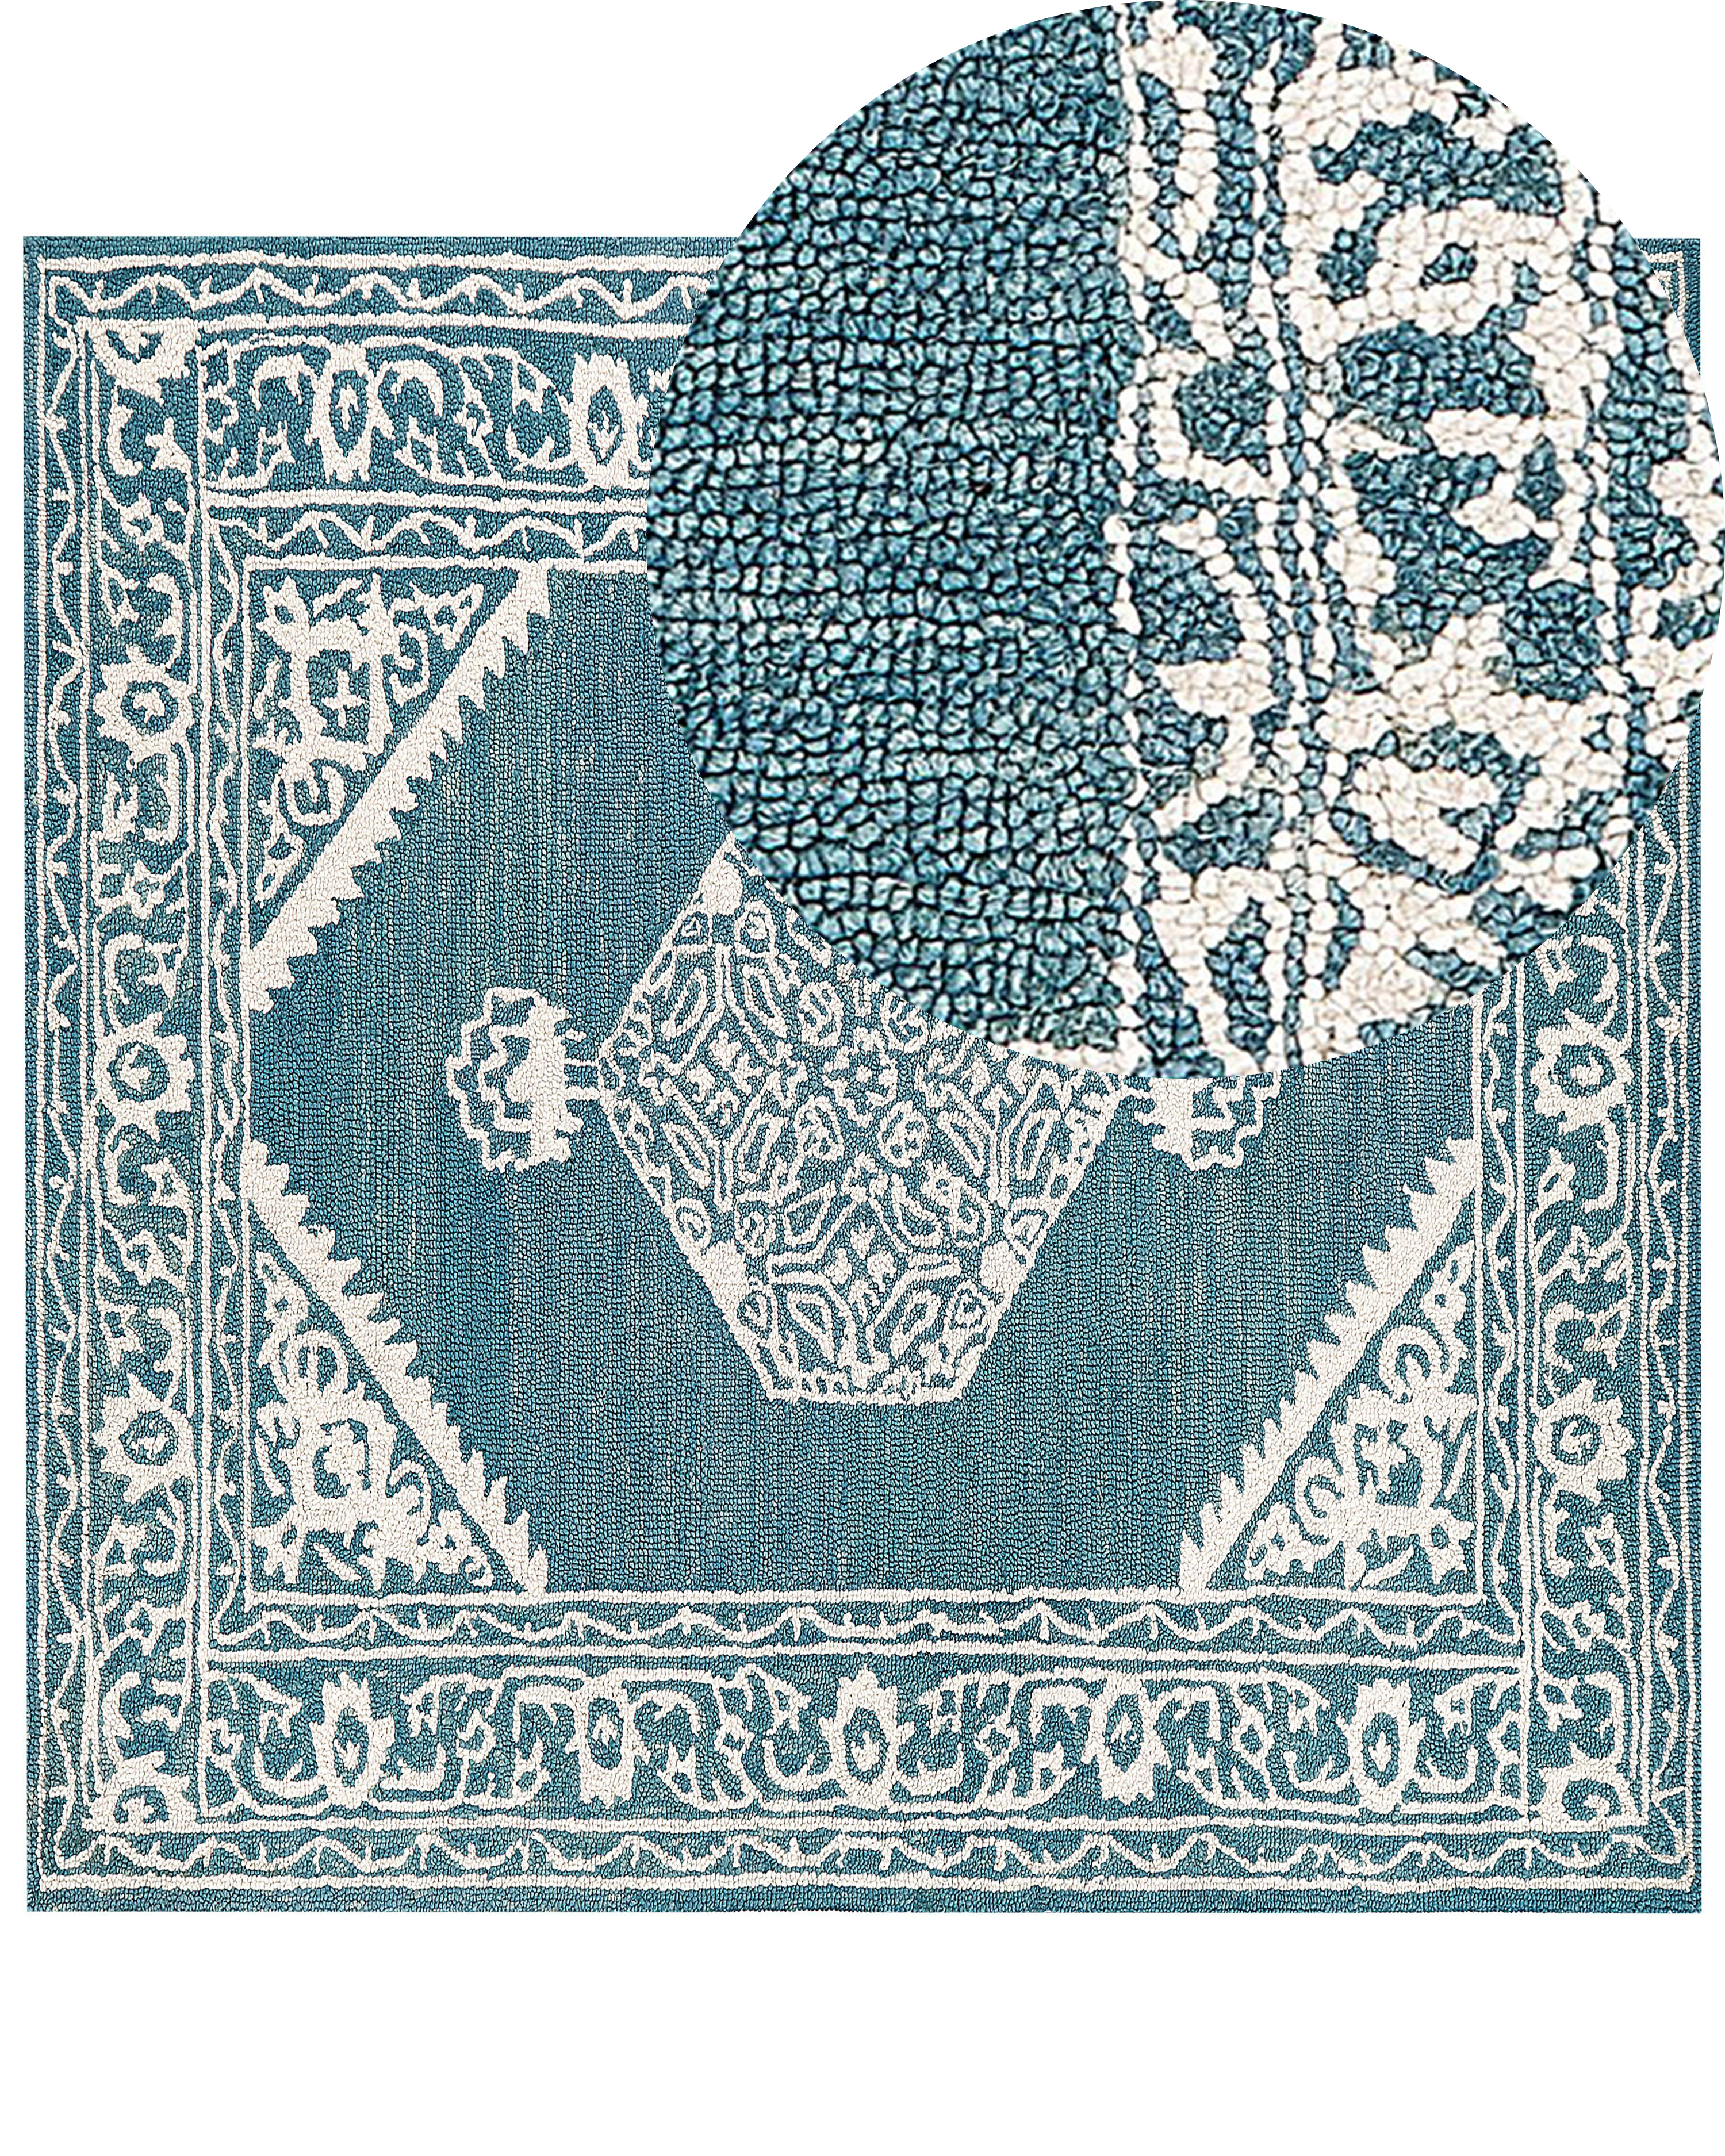 Vlněný koberec 200 x 200 cm bílý/modrý GEVAS_836856